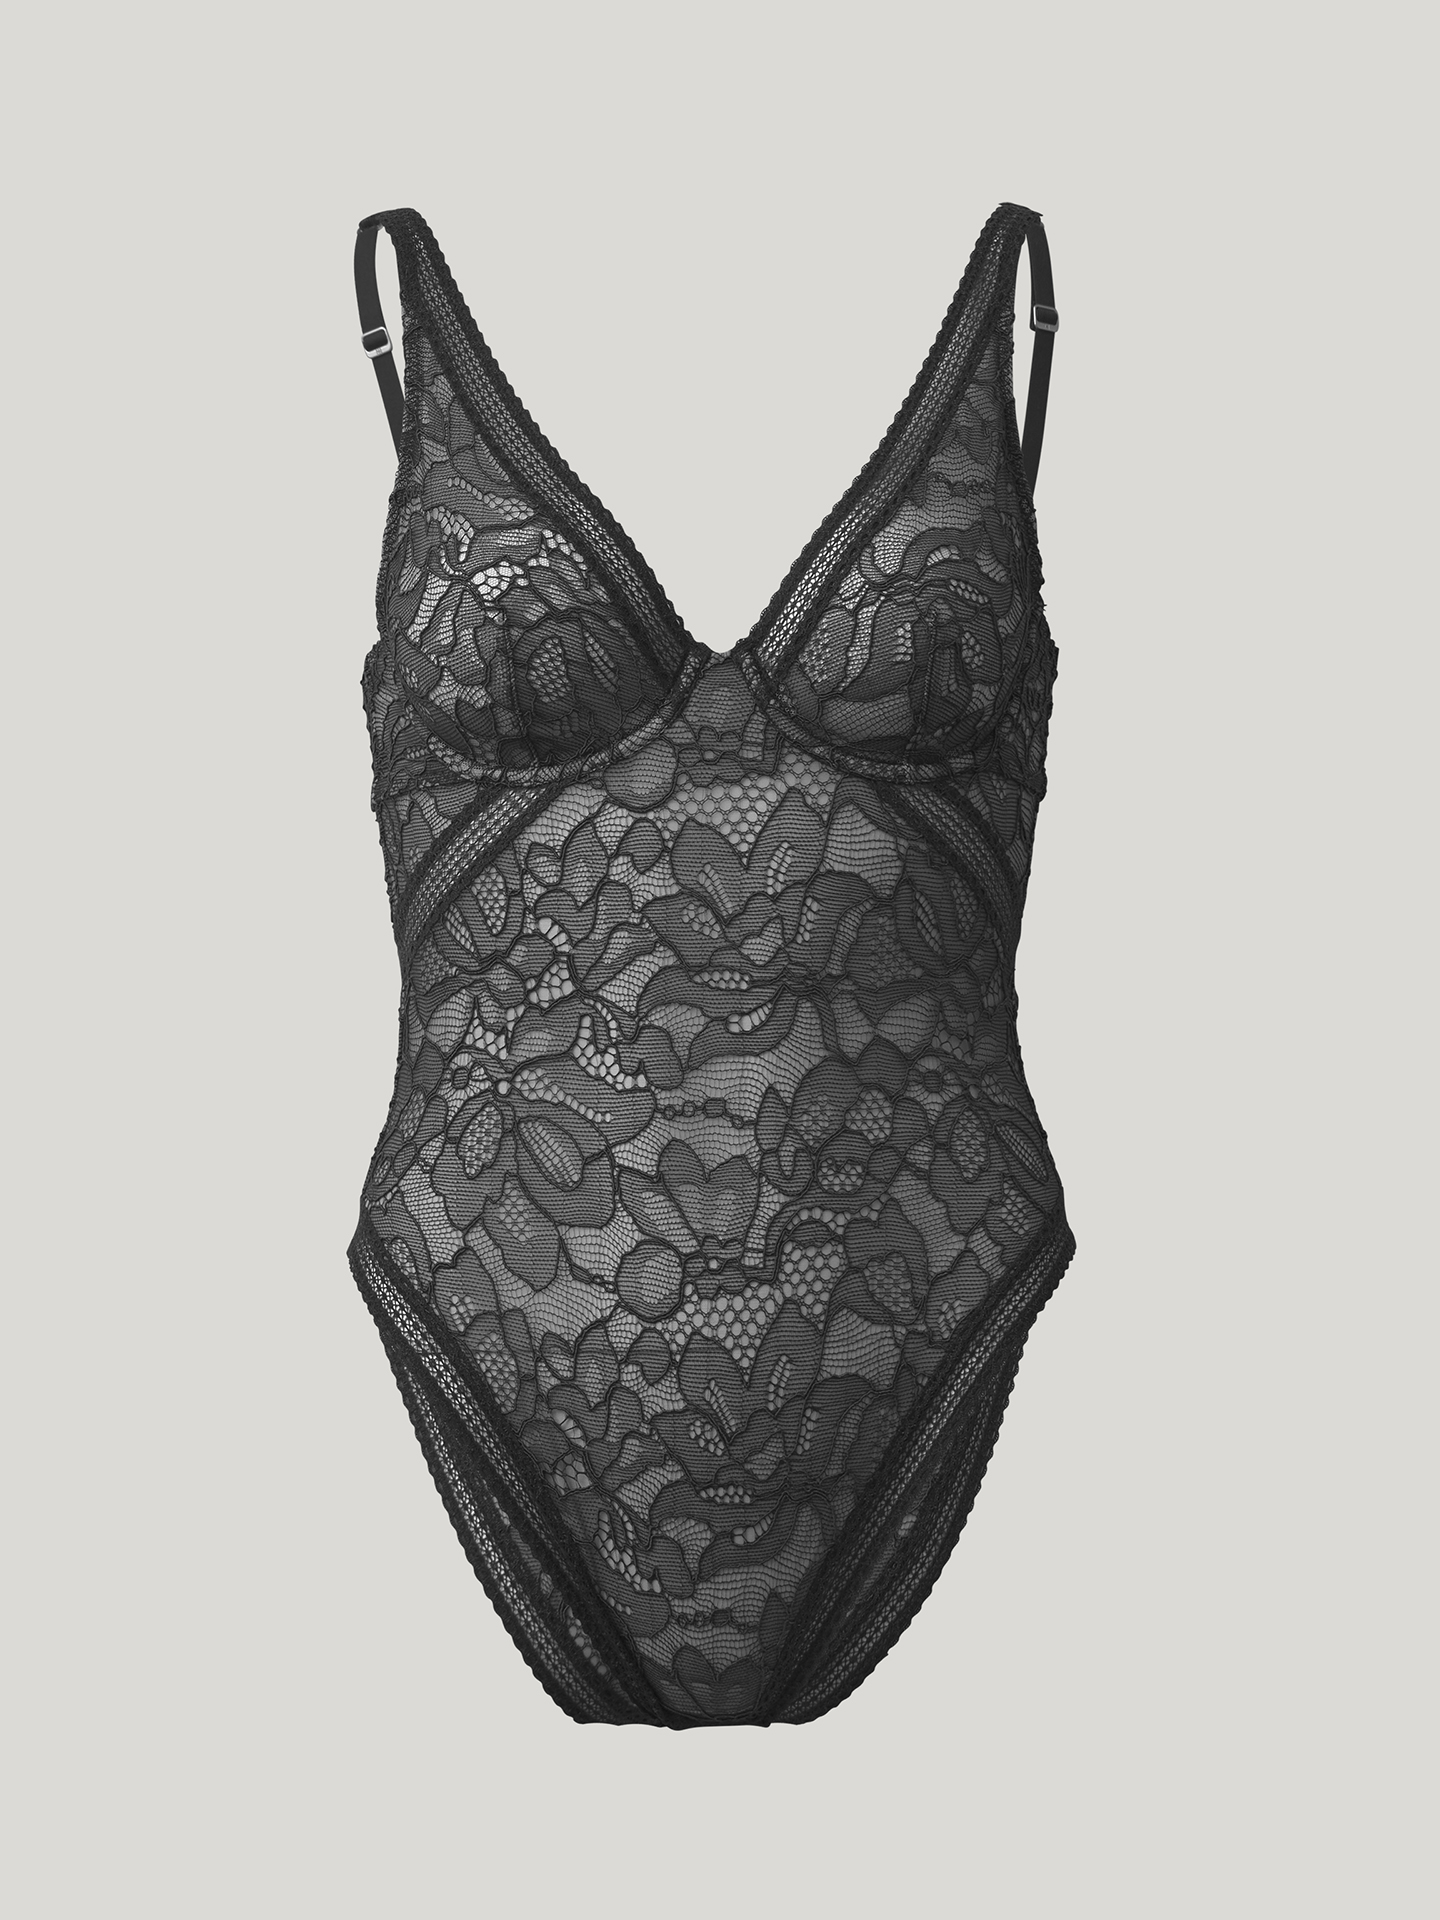 Wolford - Nets and Roses Bodysuit, Frau, black, Größe: XSA von Wolford